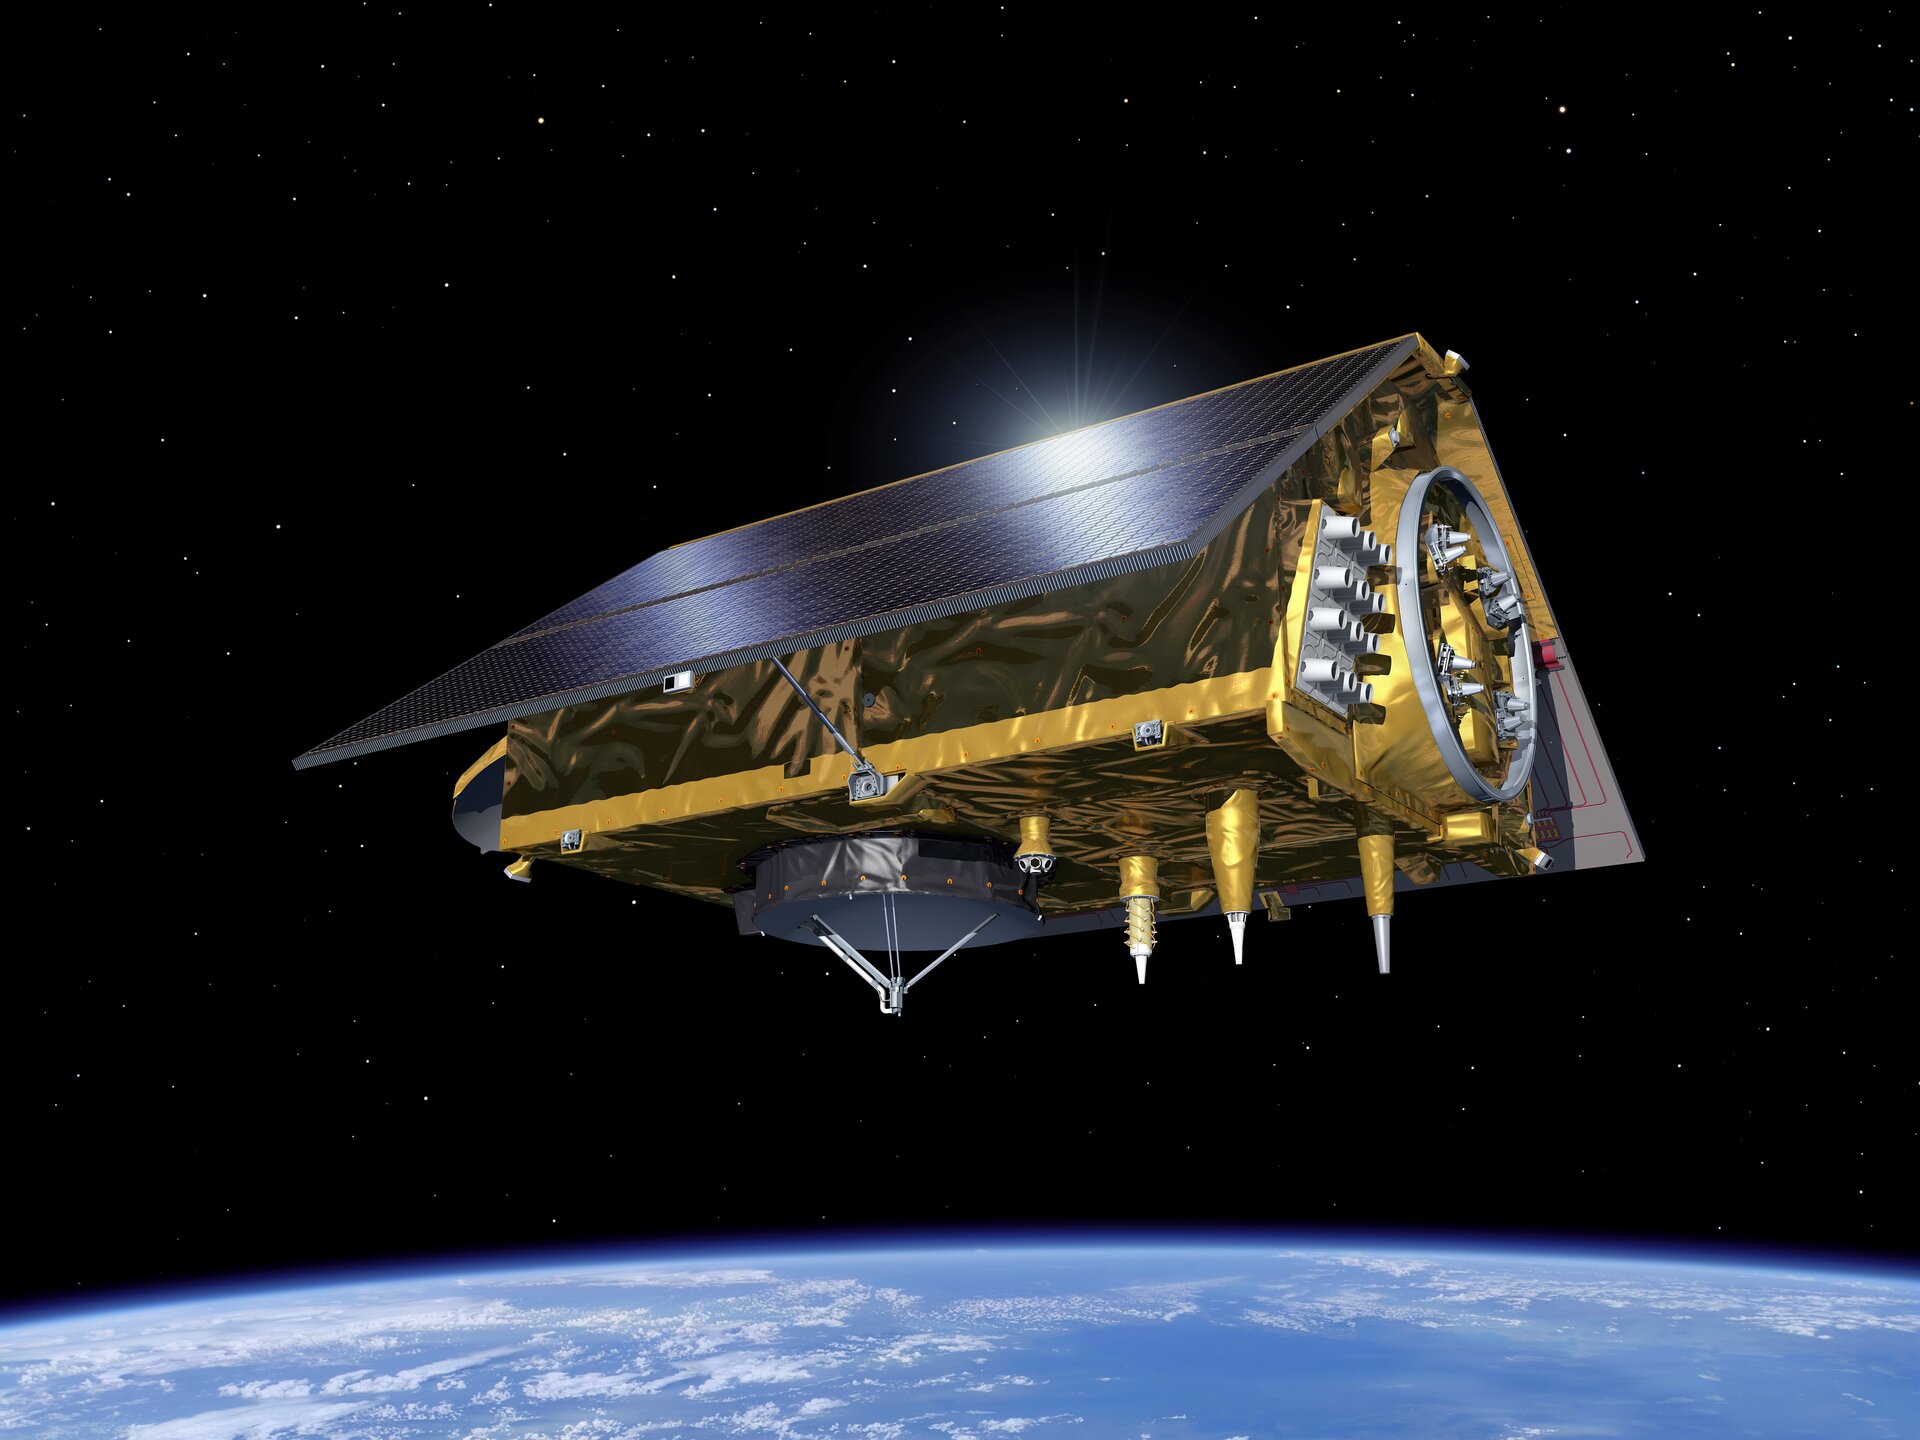 More information about "ESA: Η εκτόξευση του δορυφόρου Sentinel-6 για μέτρηση δεδομένων ξηρασίας εδάφους και αστικοποίησης"